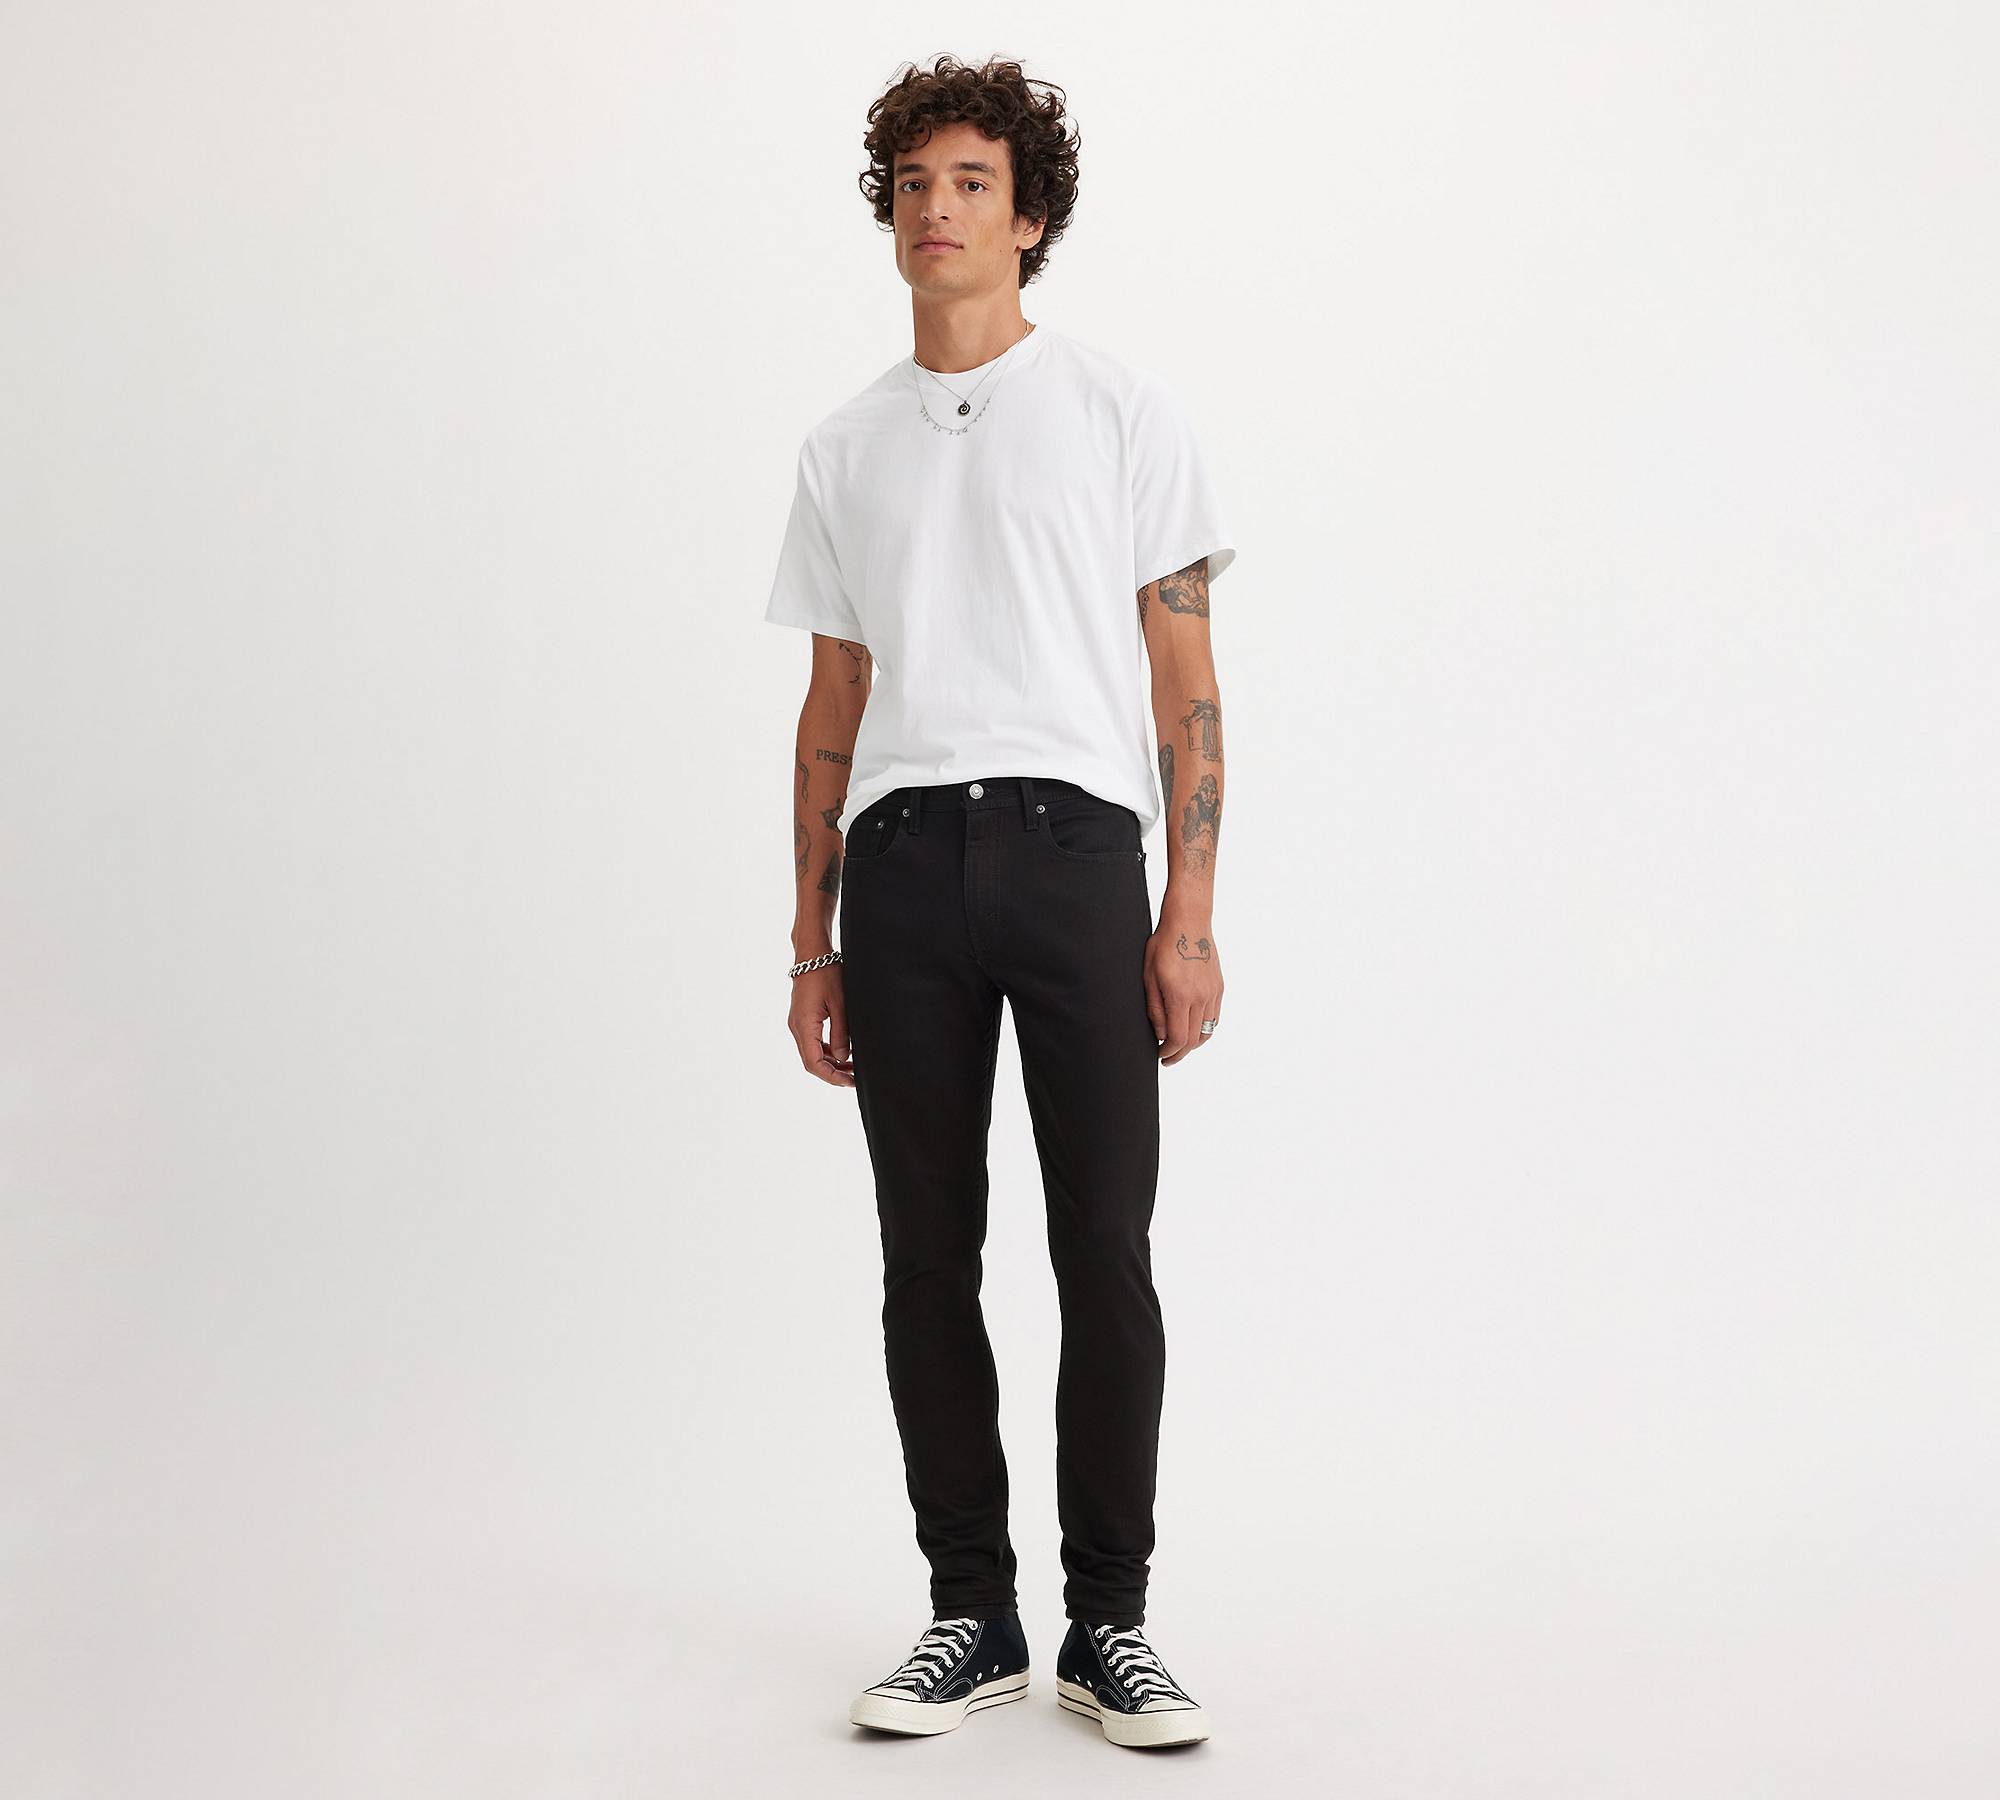 Skinny Taper Fit Men's Jeans - Black | Levi's® US